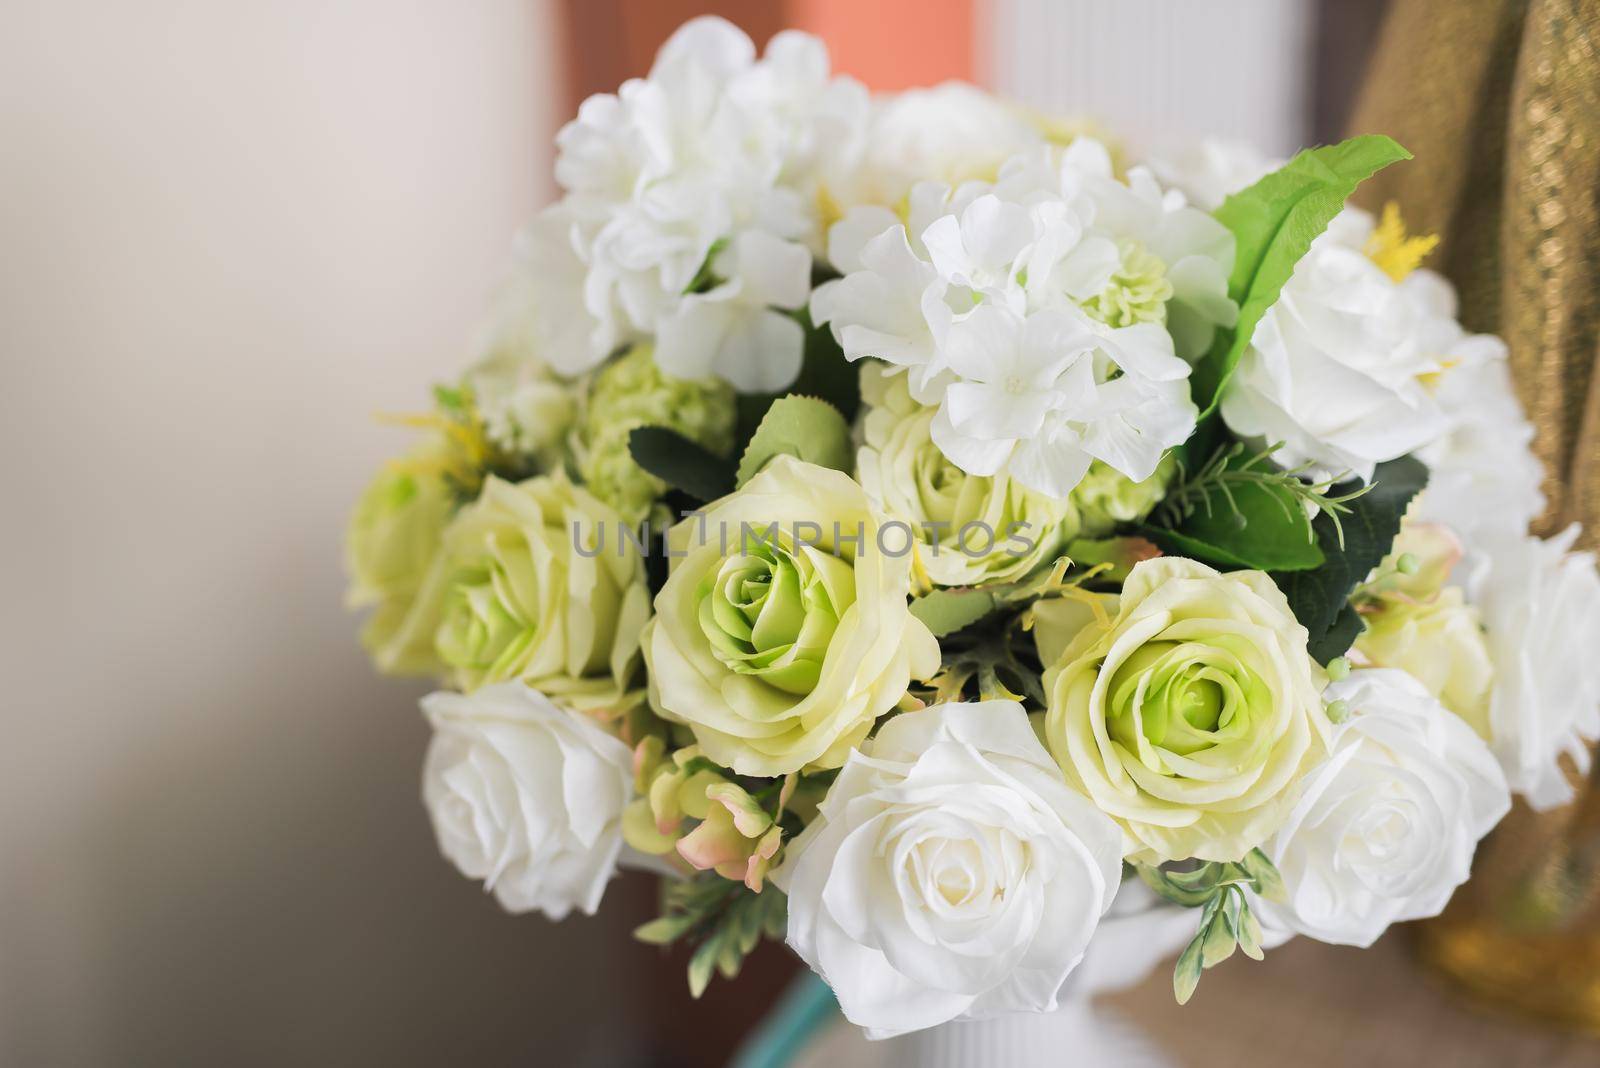 White flowers wedding